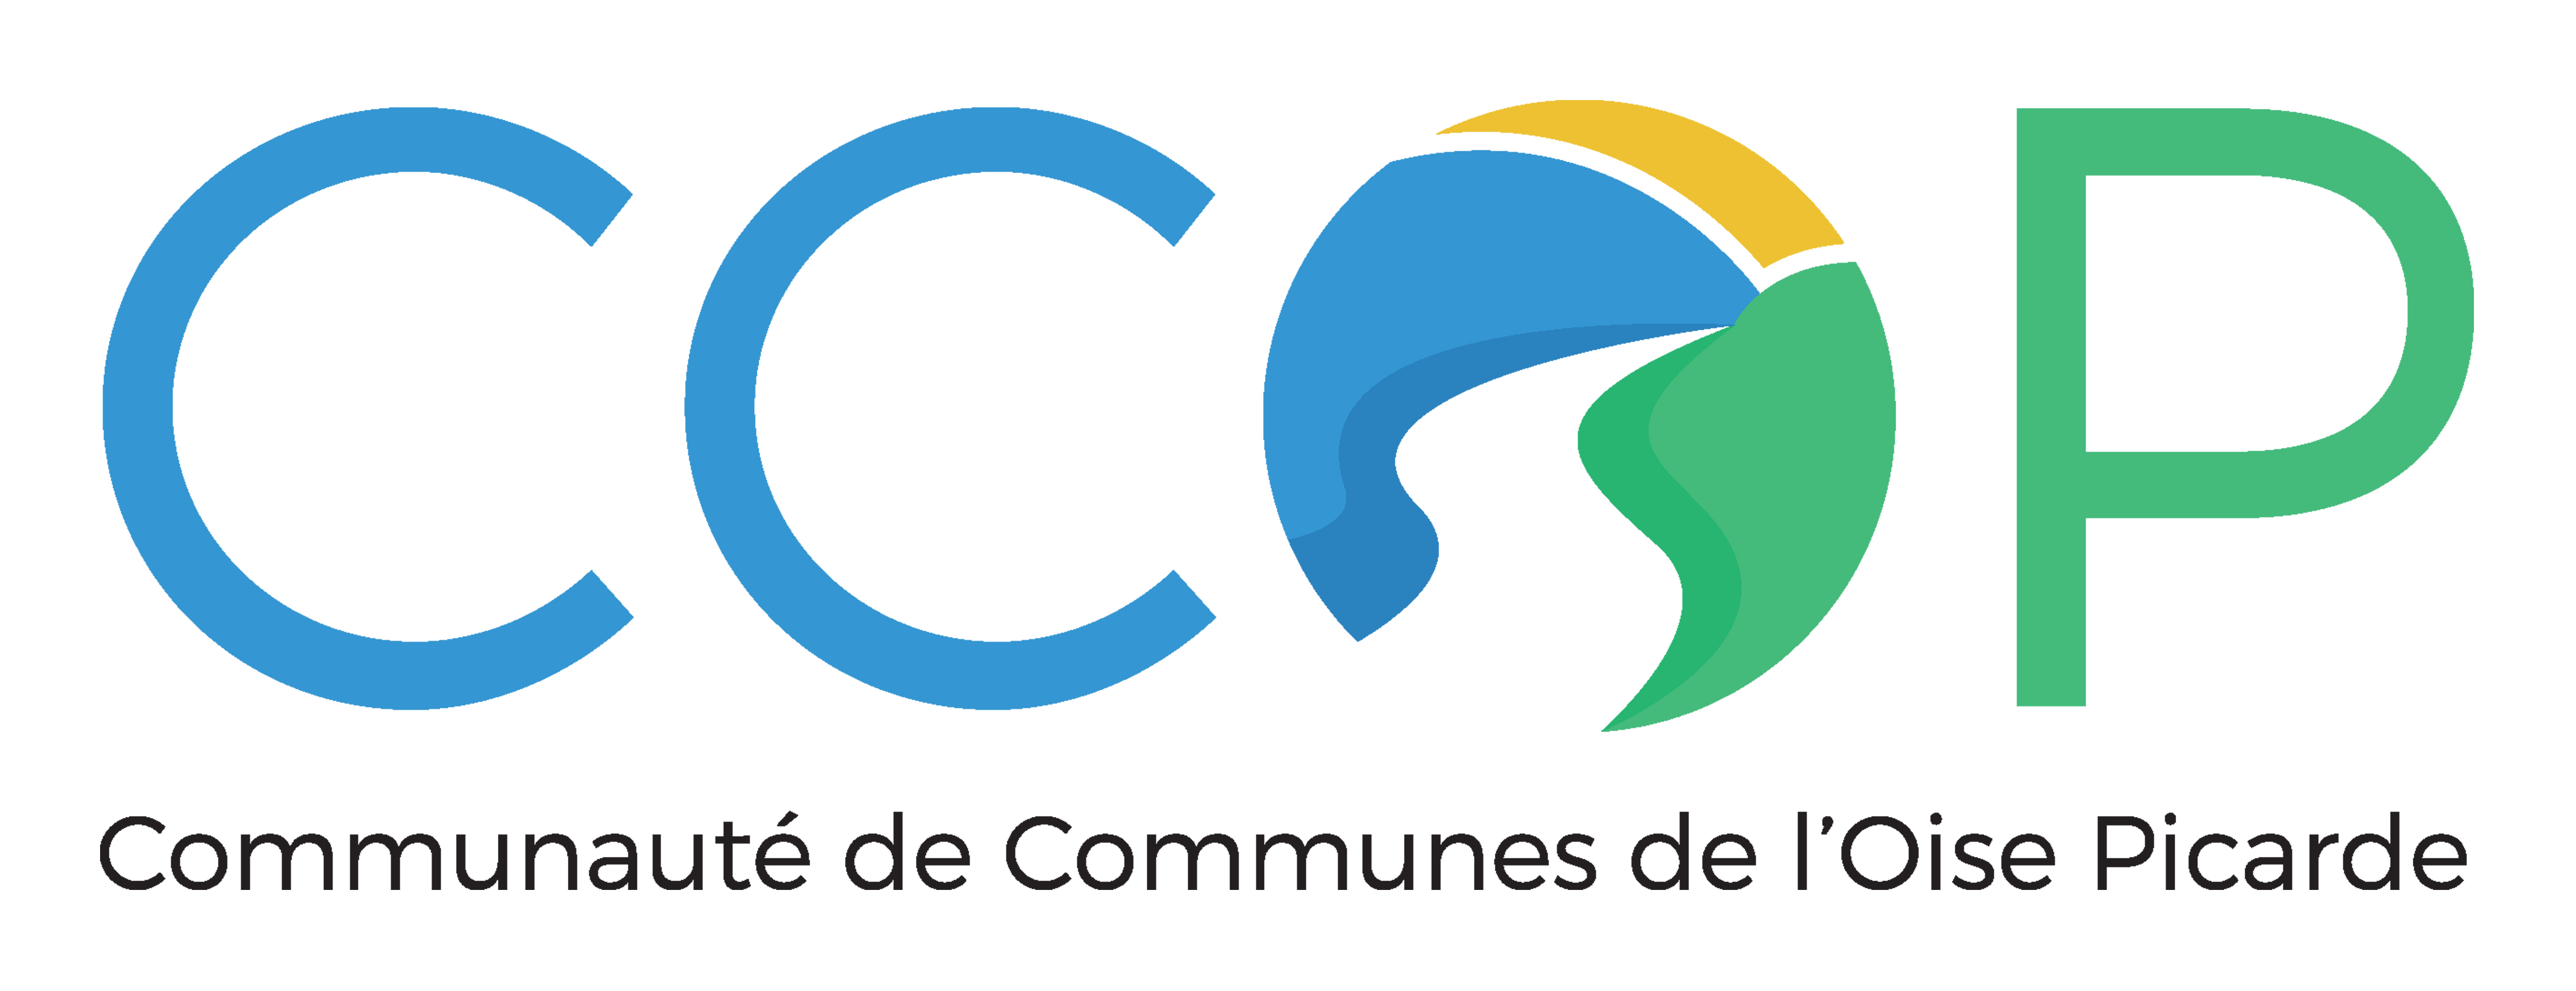 logo ccop.jpg